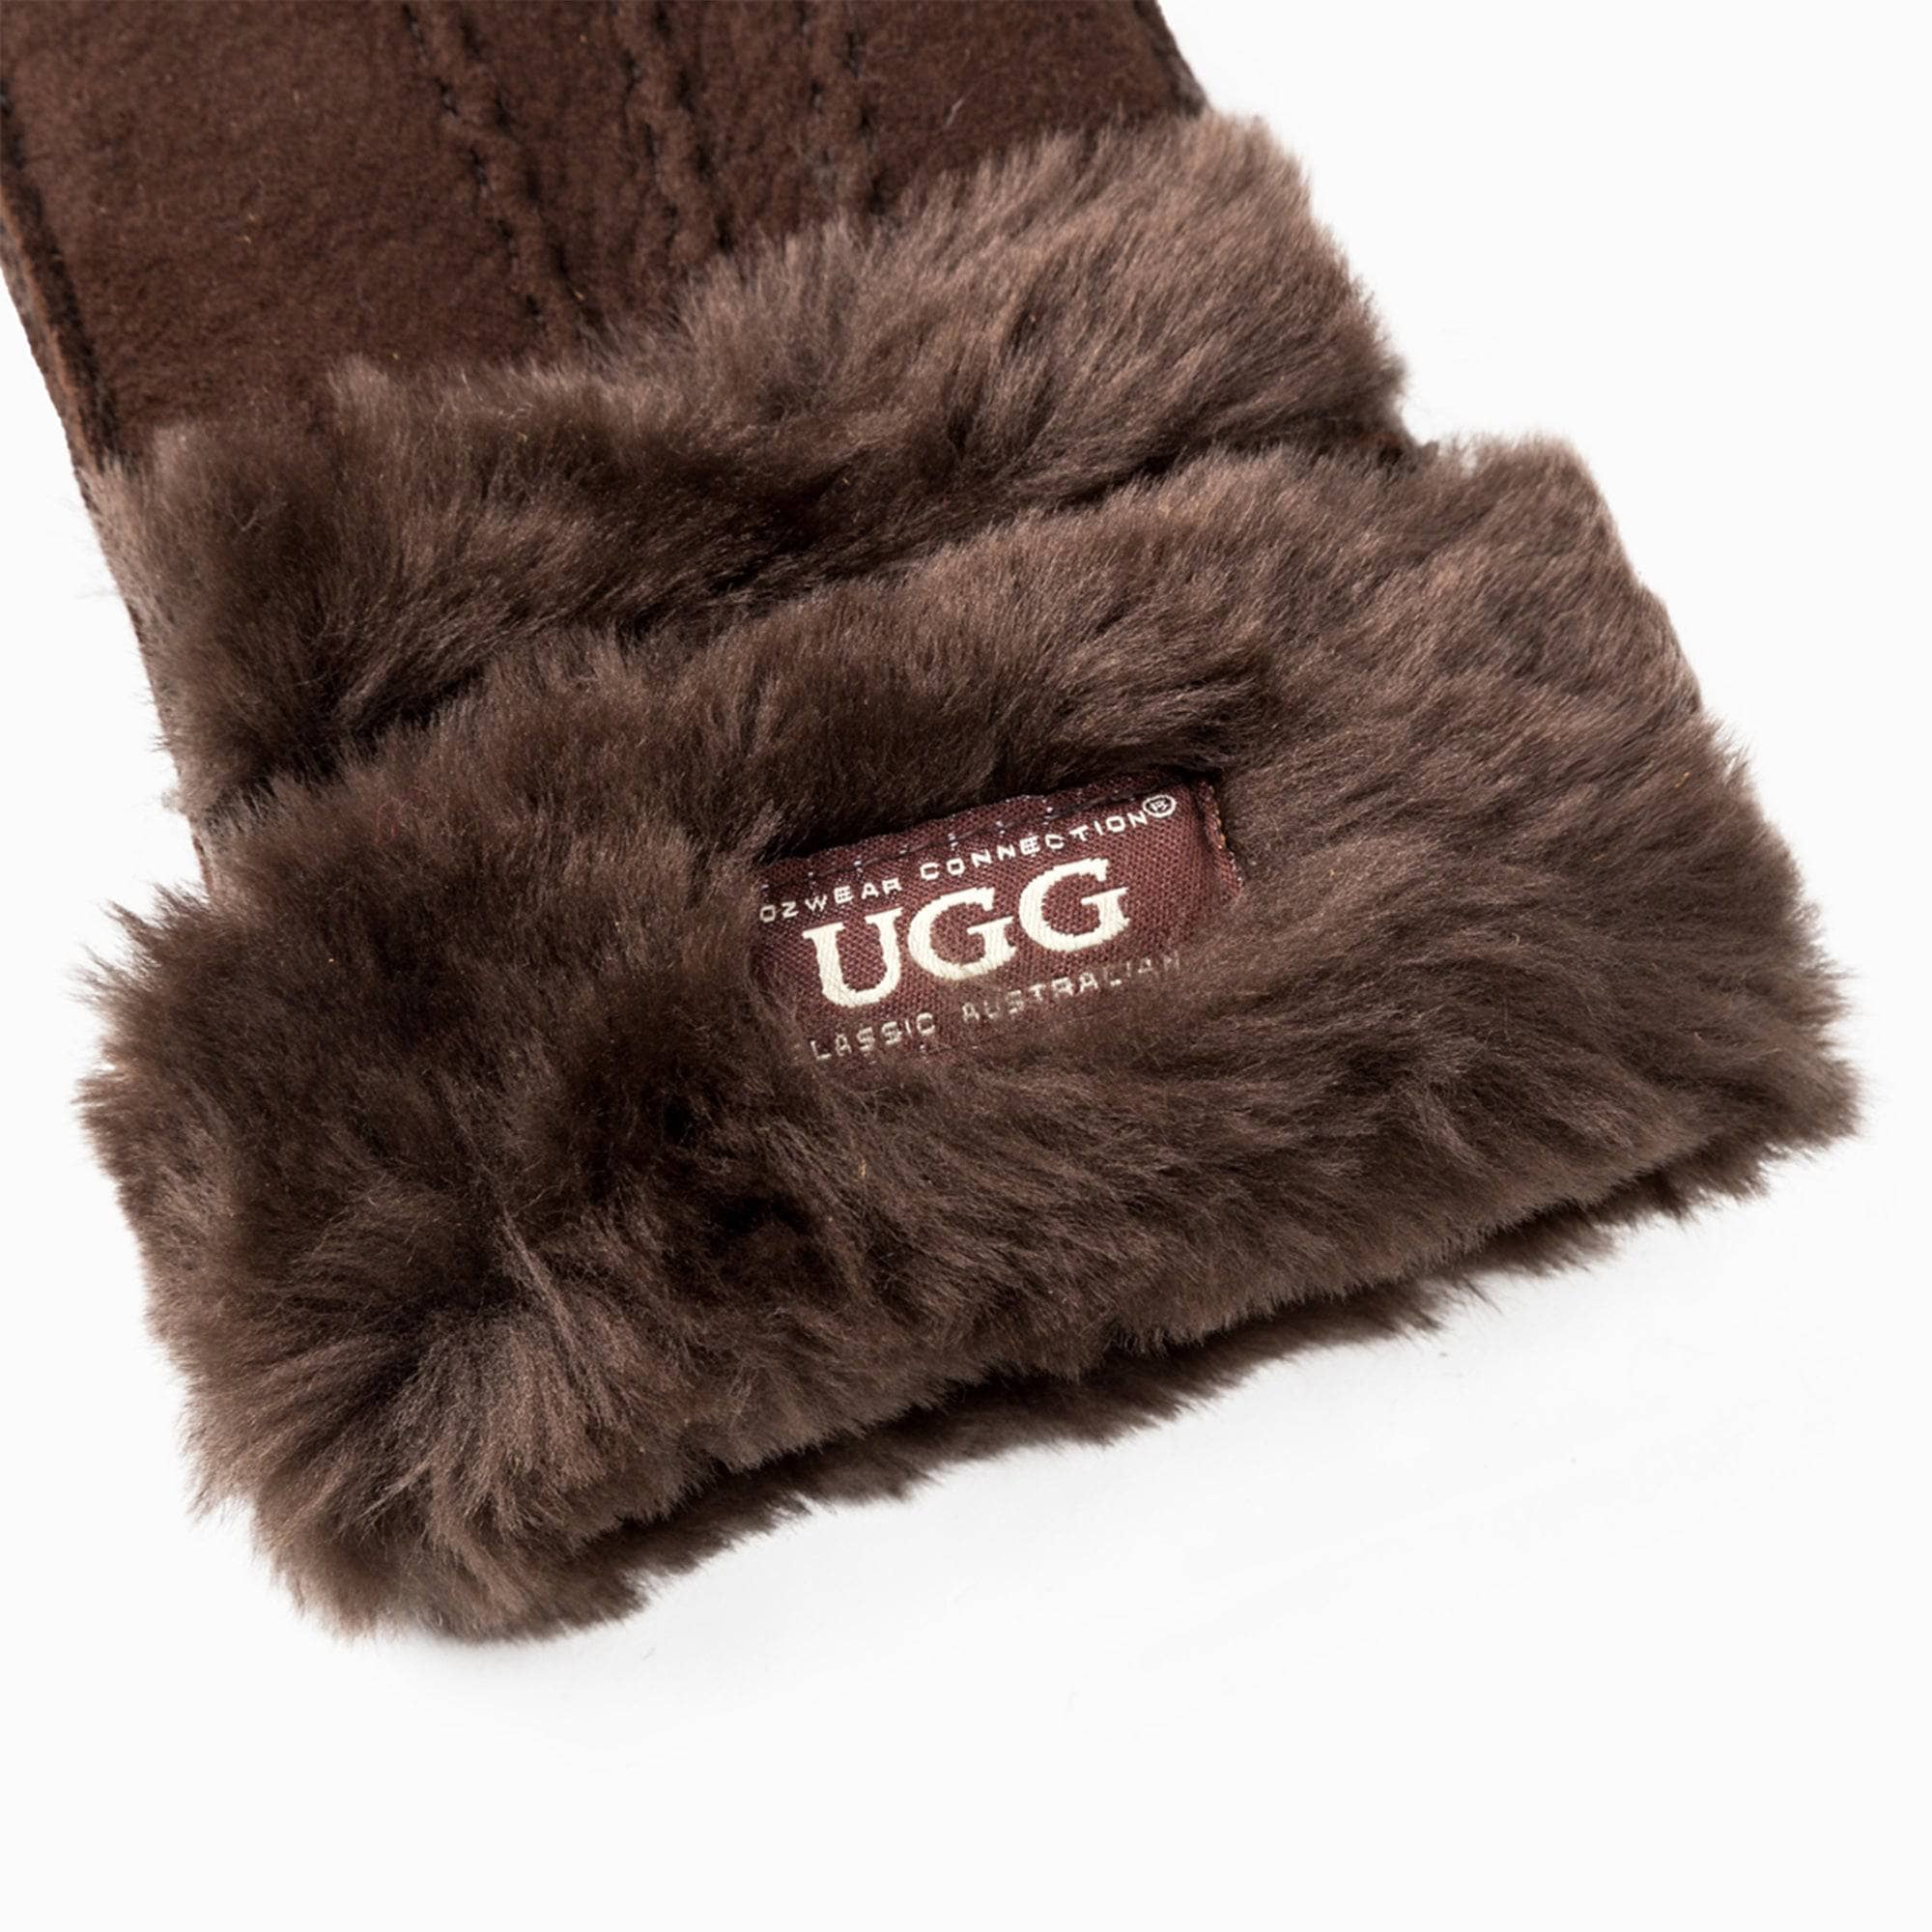  - UGG Premium Double Cuff Sheepskin Gloves - Original UGG Australia Classic